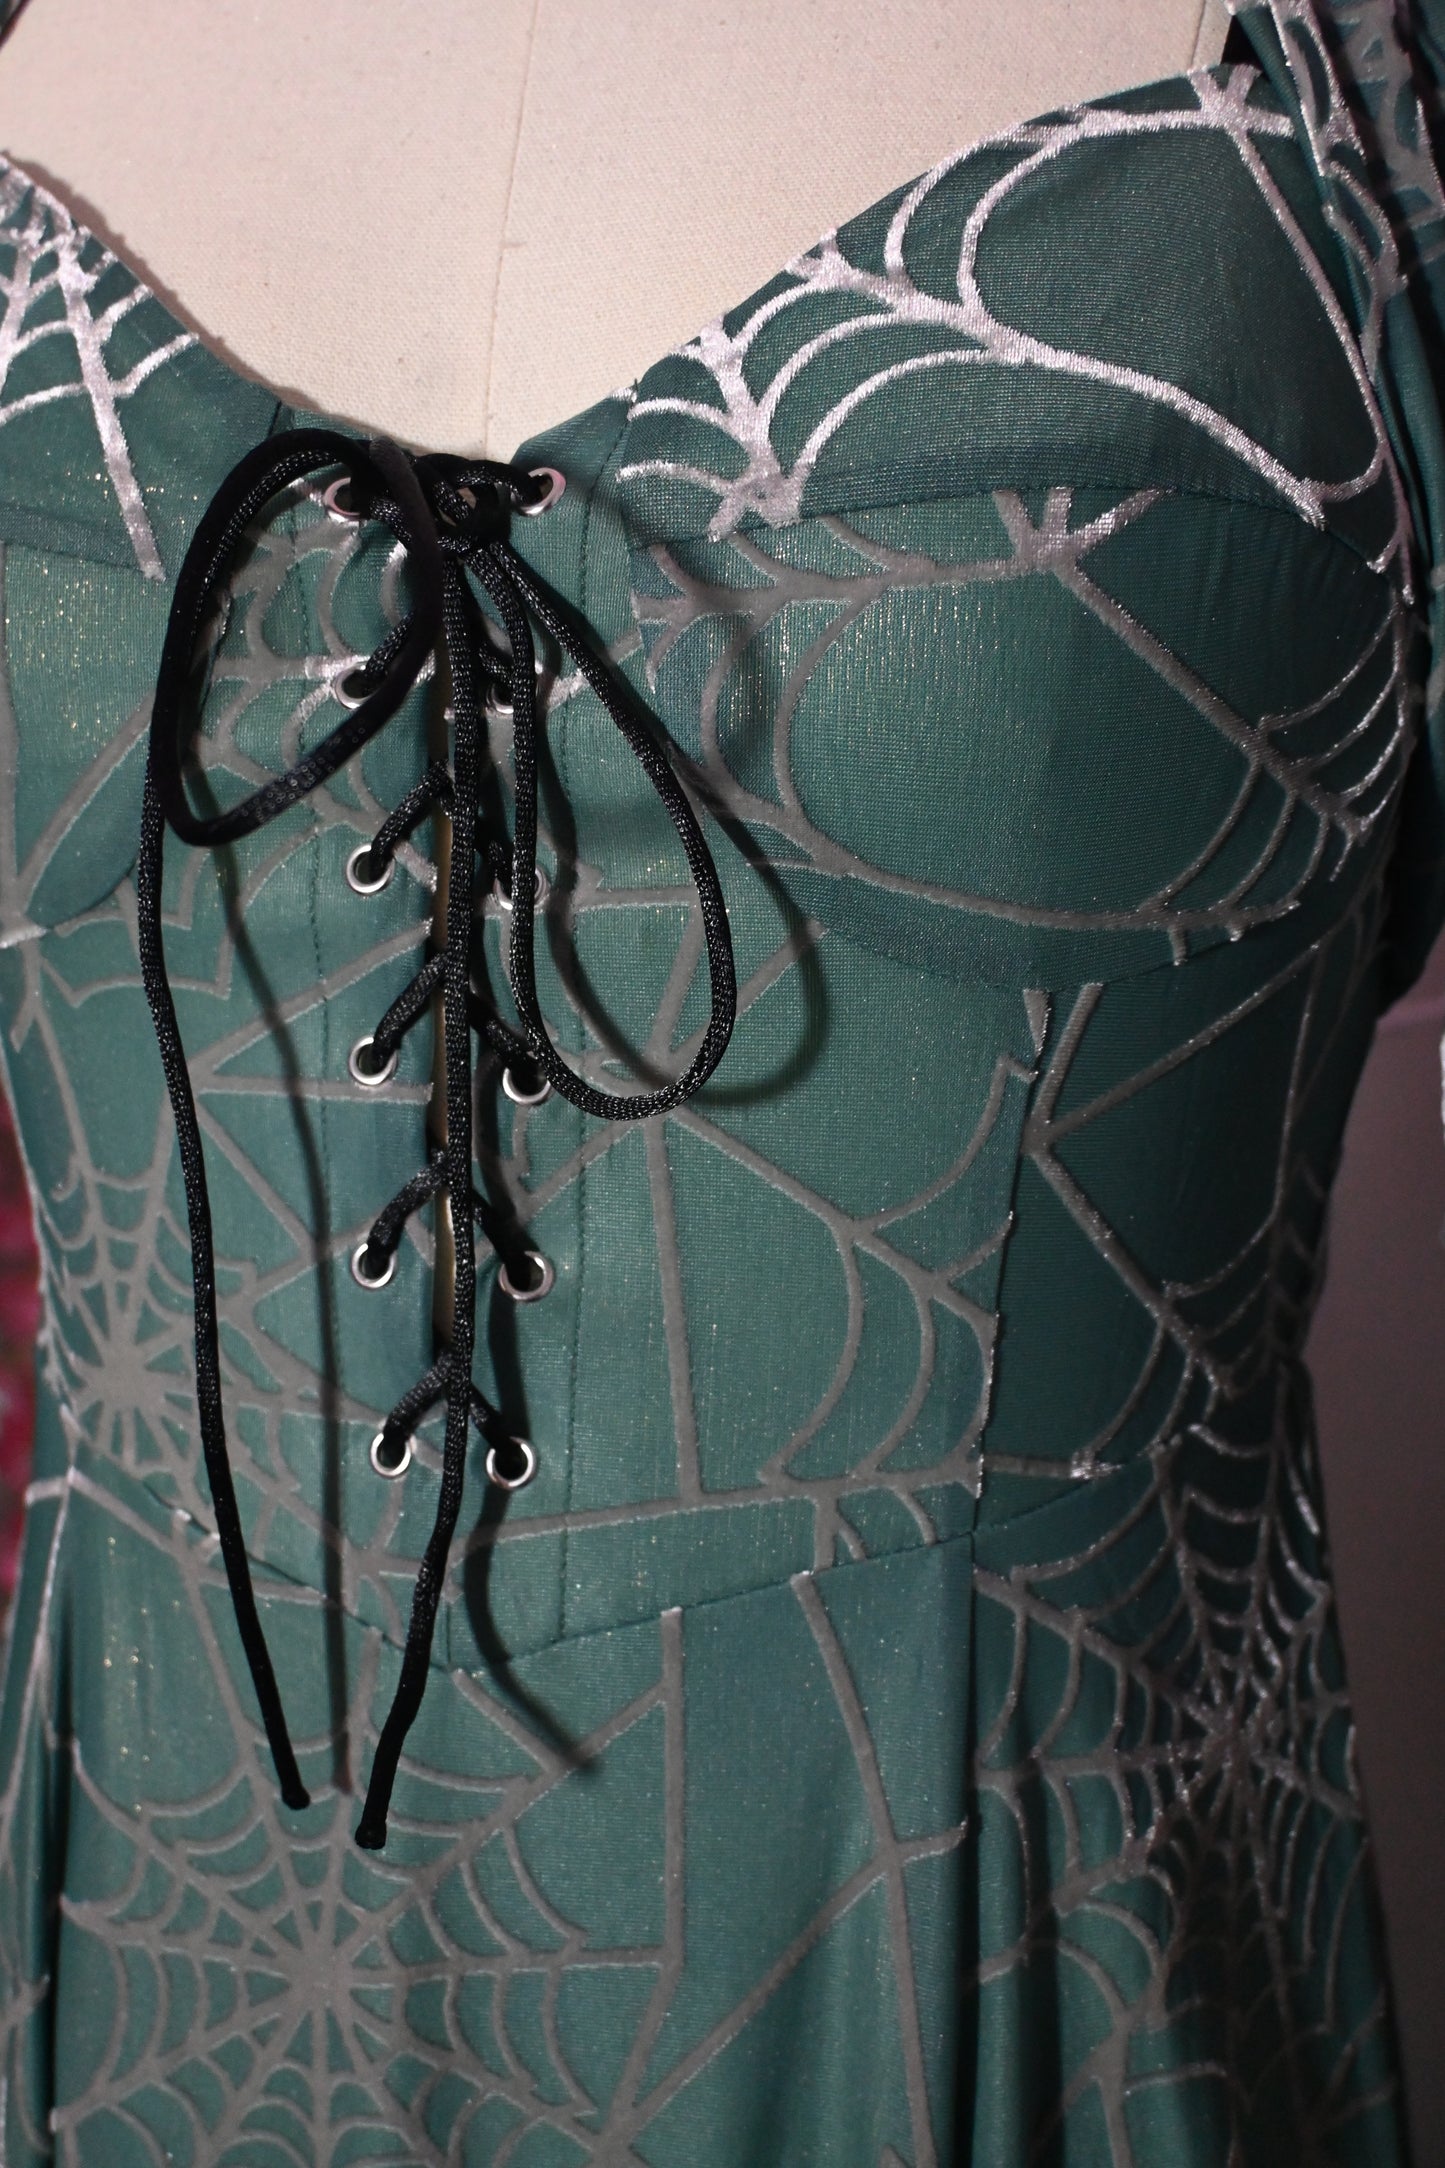 Willow Spiderweb Maxi Dress and Bolero in Mermaid Green